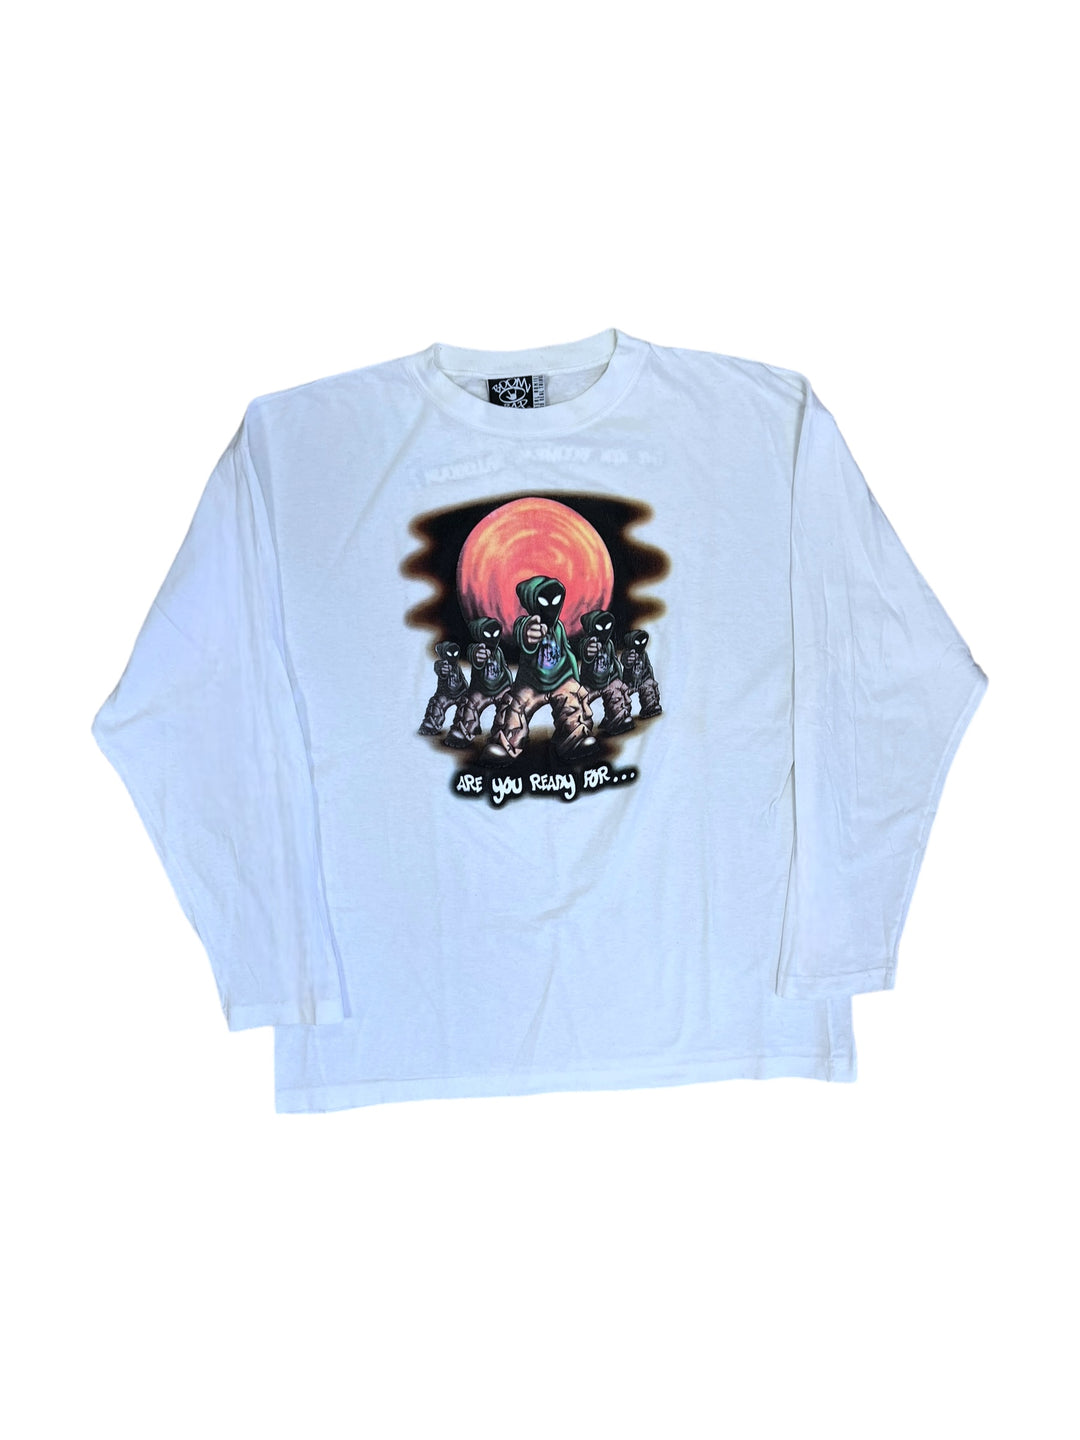 Vintage 90’s skateboard printed shirt Men’s Medium